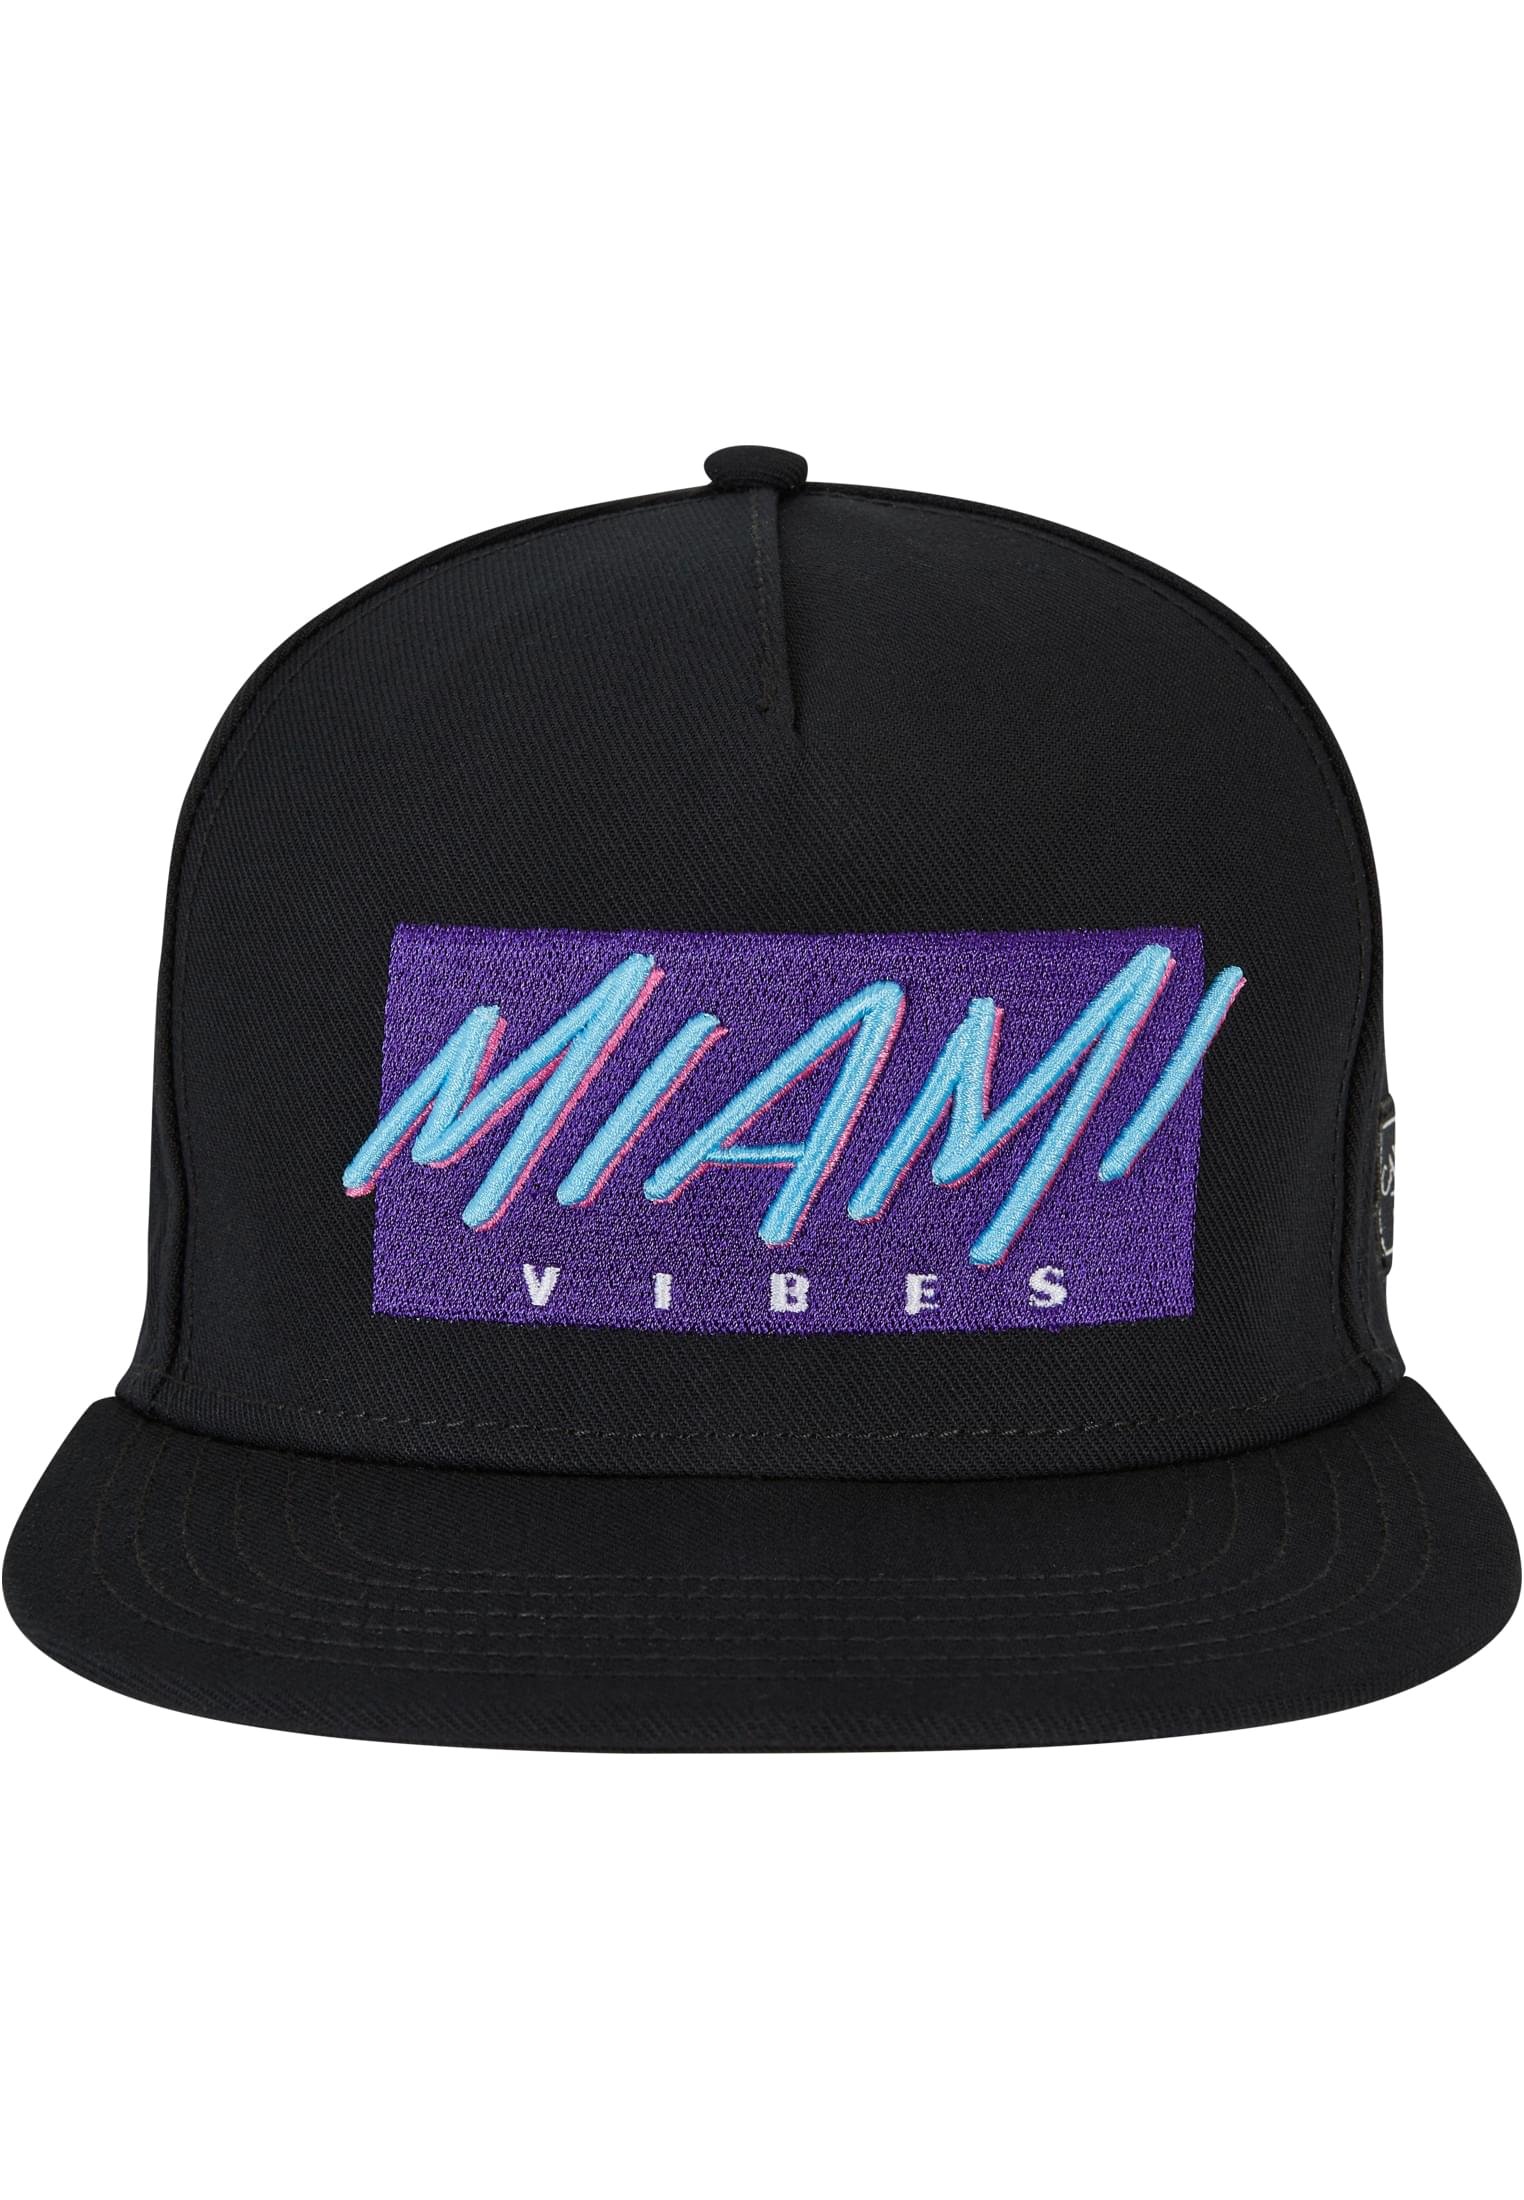 Miami Vibes P Cap black one size